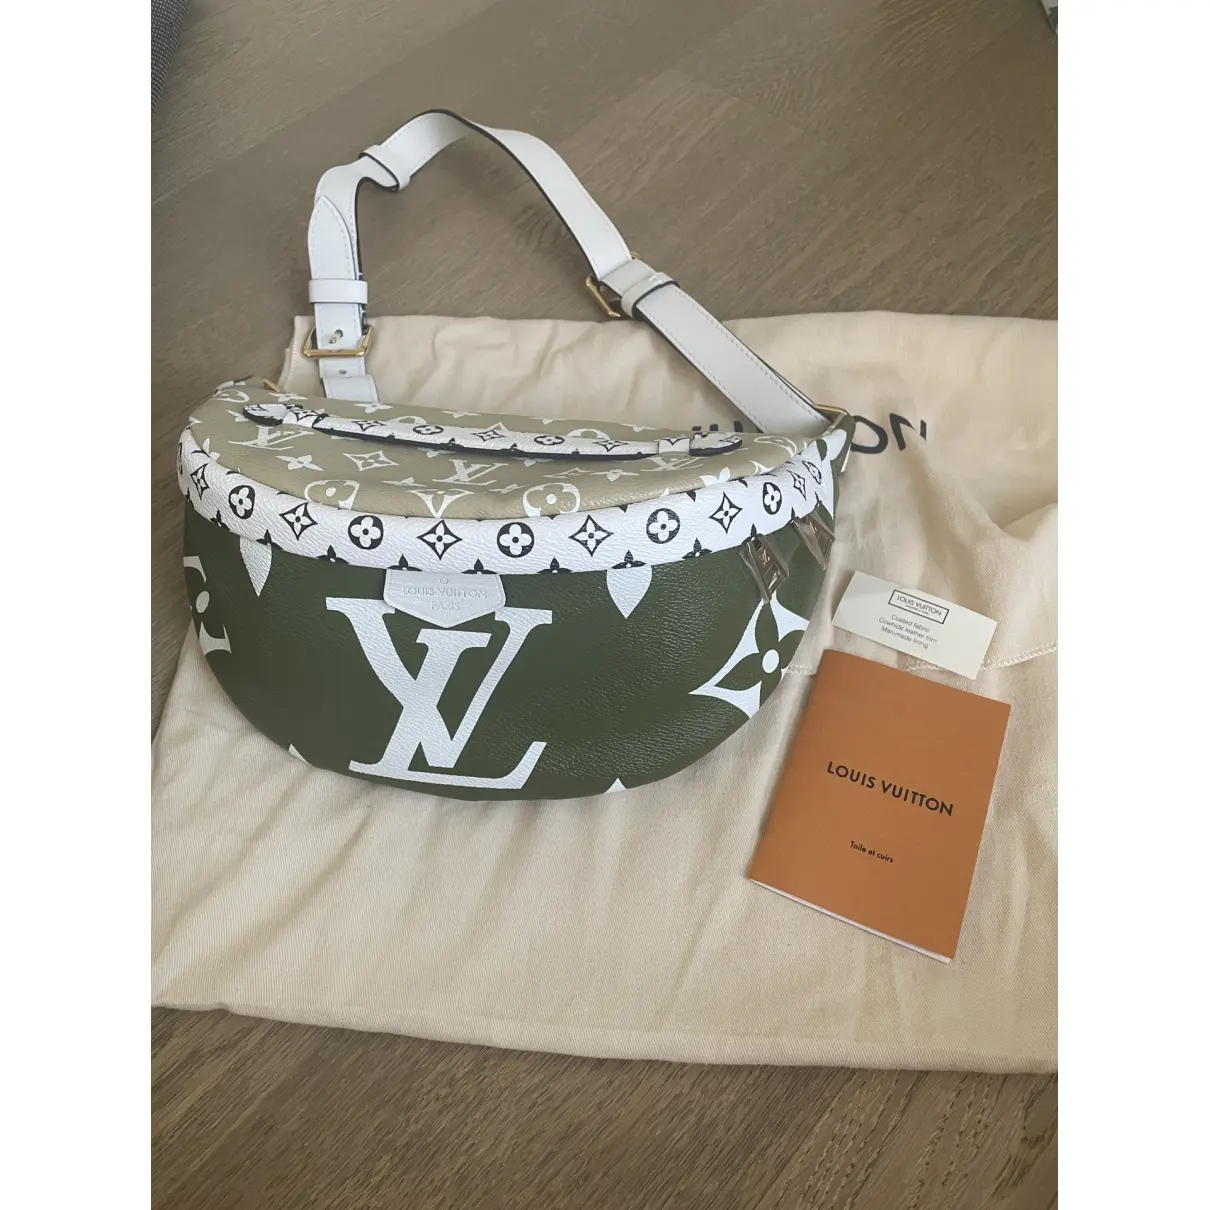 Buy Louis Vuitton Bum Bag / Sac Ceinture leather handbag online